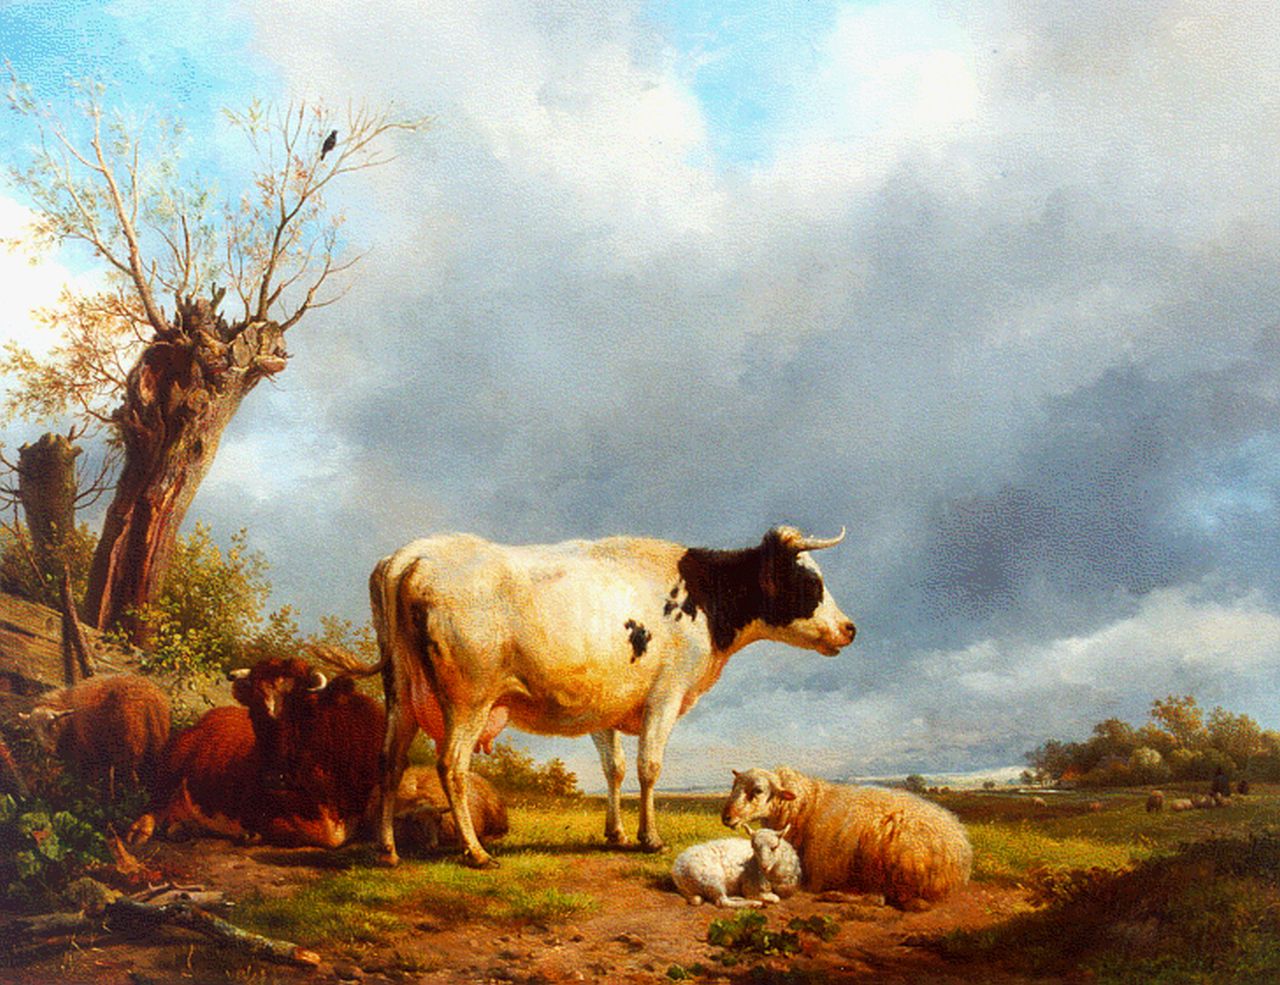 Sande Bakhuyzen H. van de | Hendrikus van de Sande Bakhuyzen, Cattle in a landscape, oil on panel 70.5 x 91.2 cm, signed l.l. and dated 1839